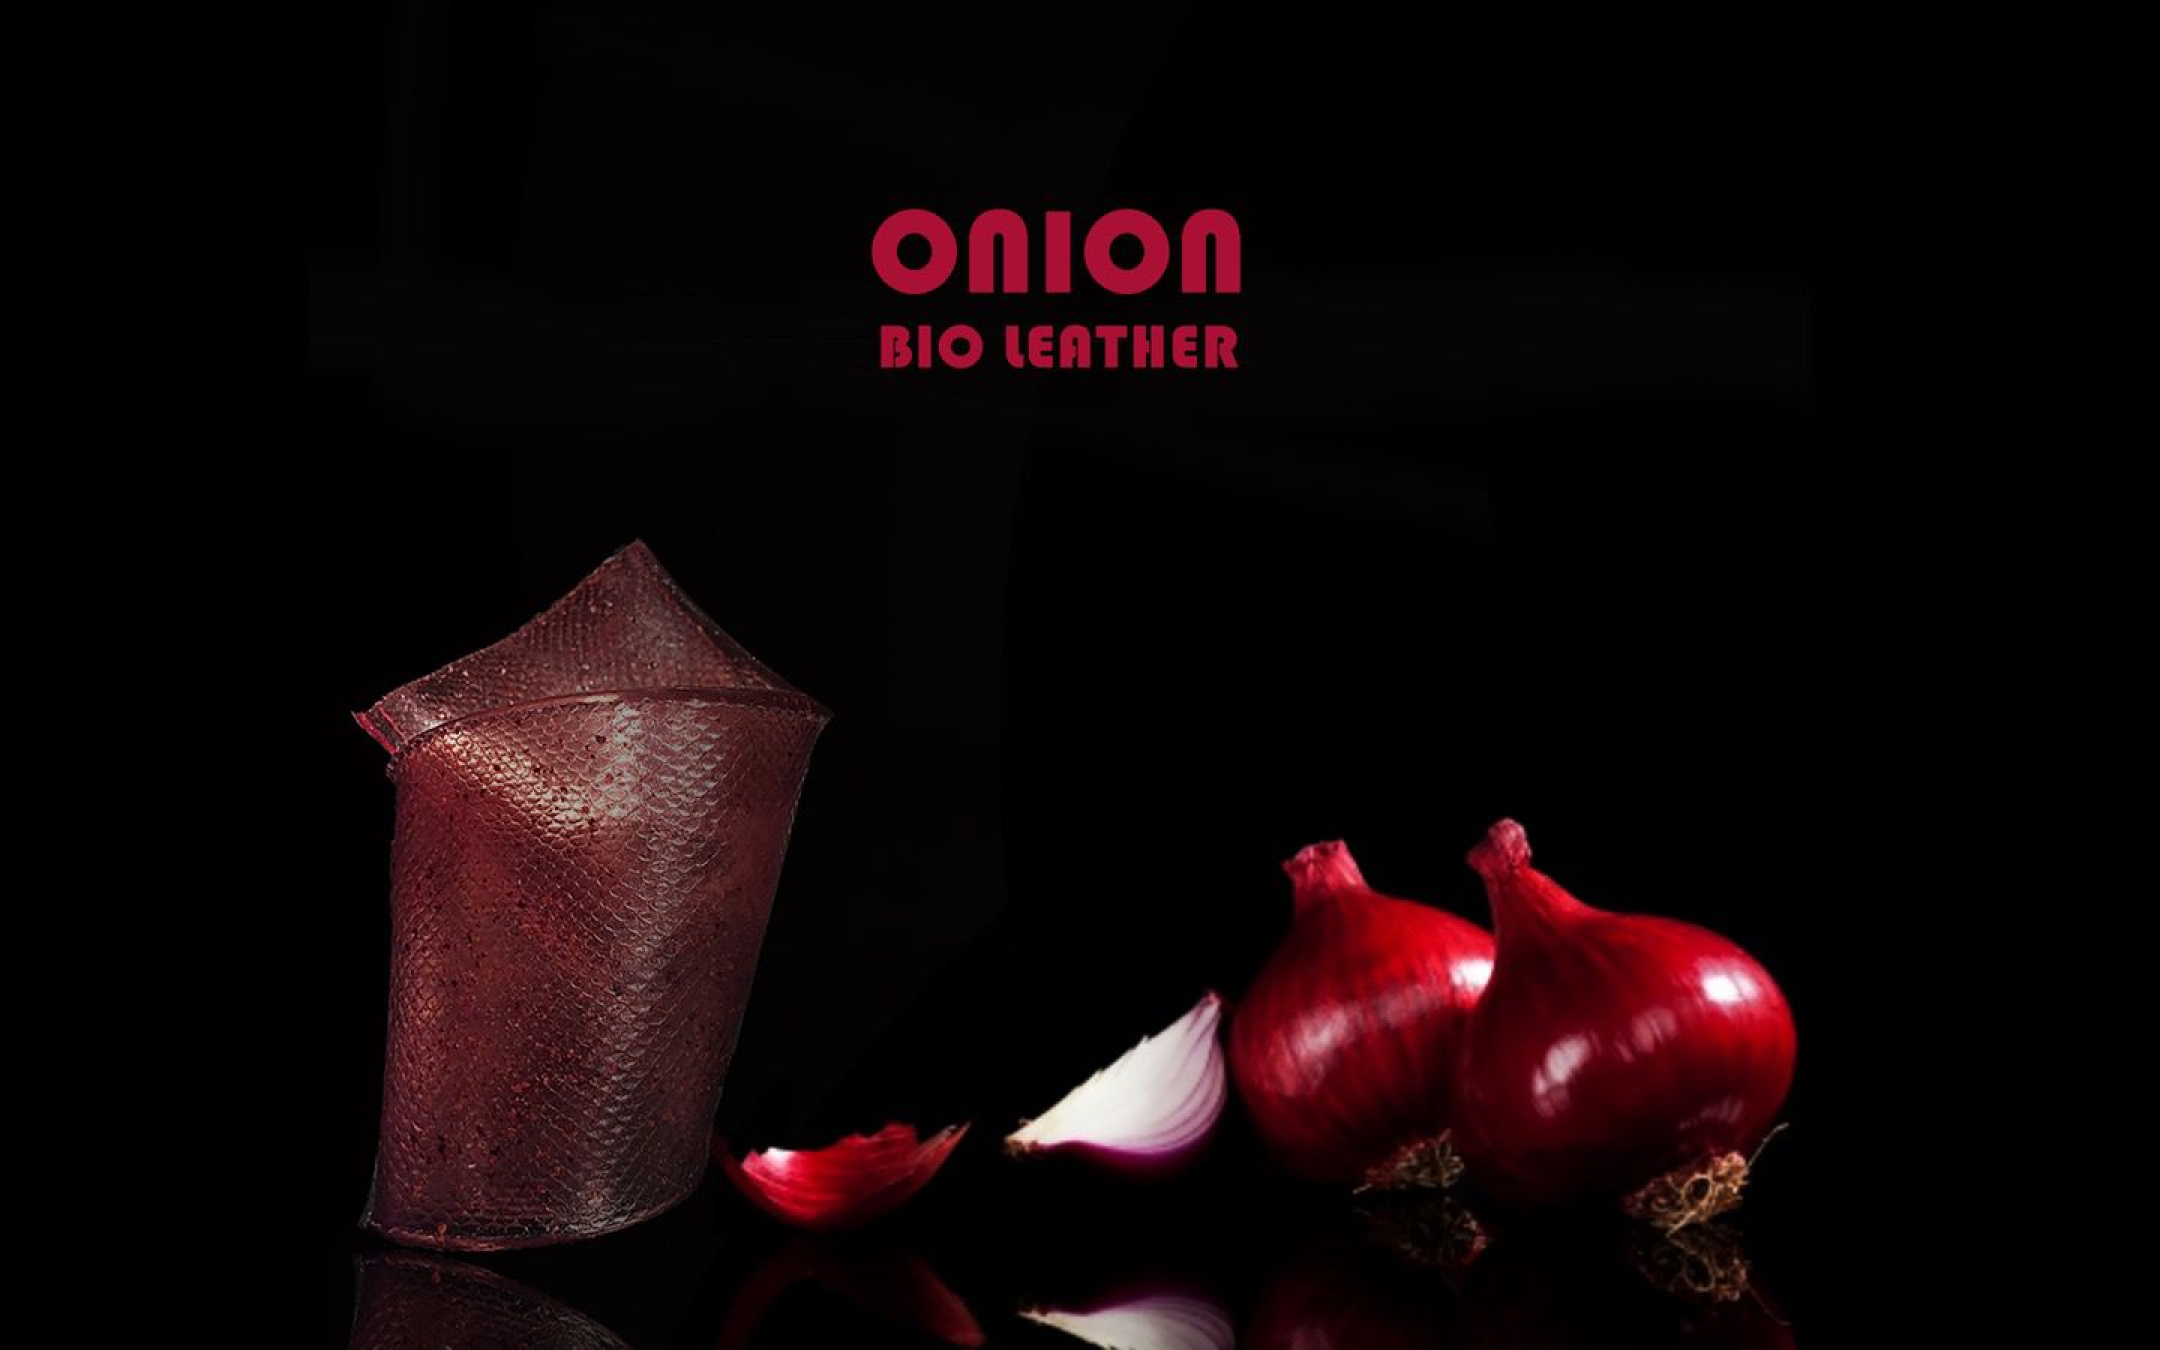 Onion bio leather